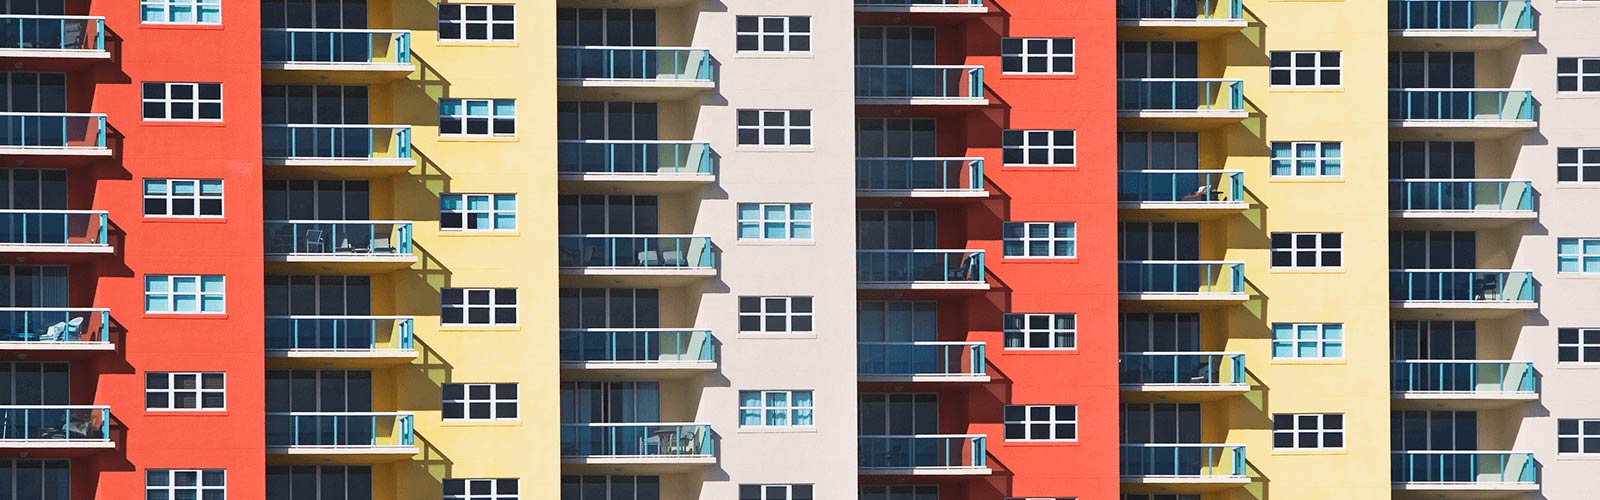 A multicolor apartment building with outdoor decks.